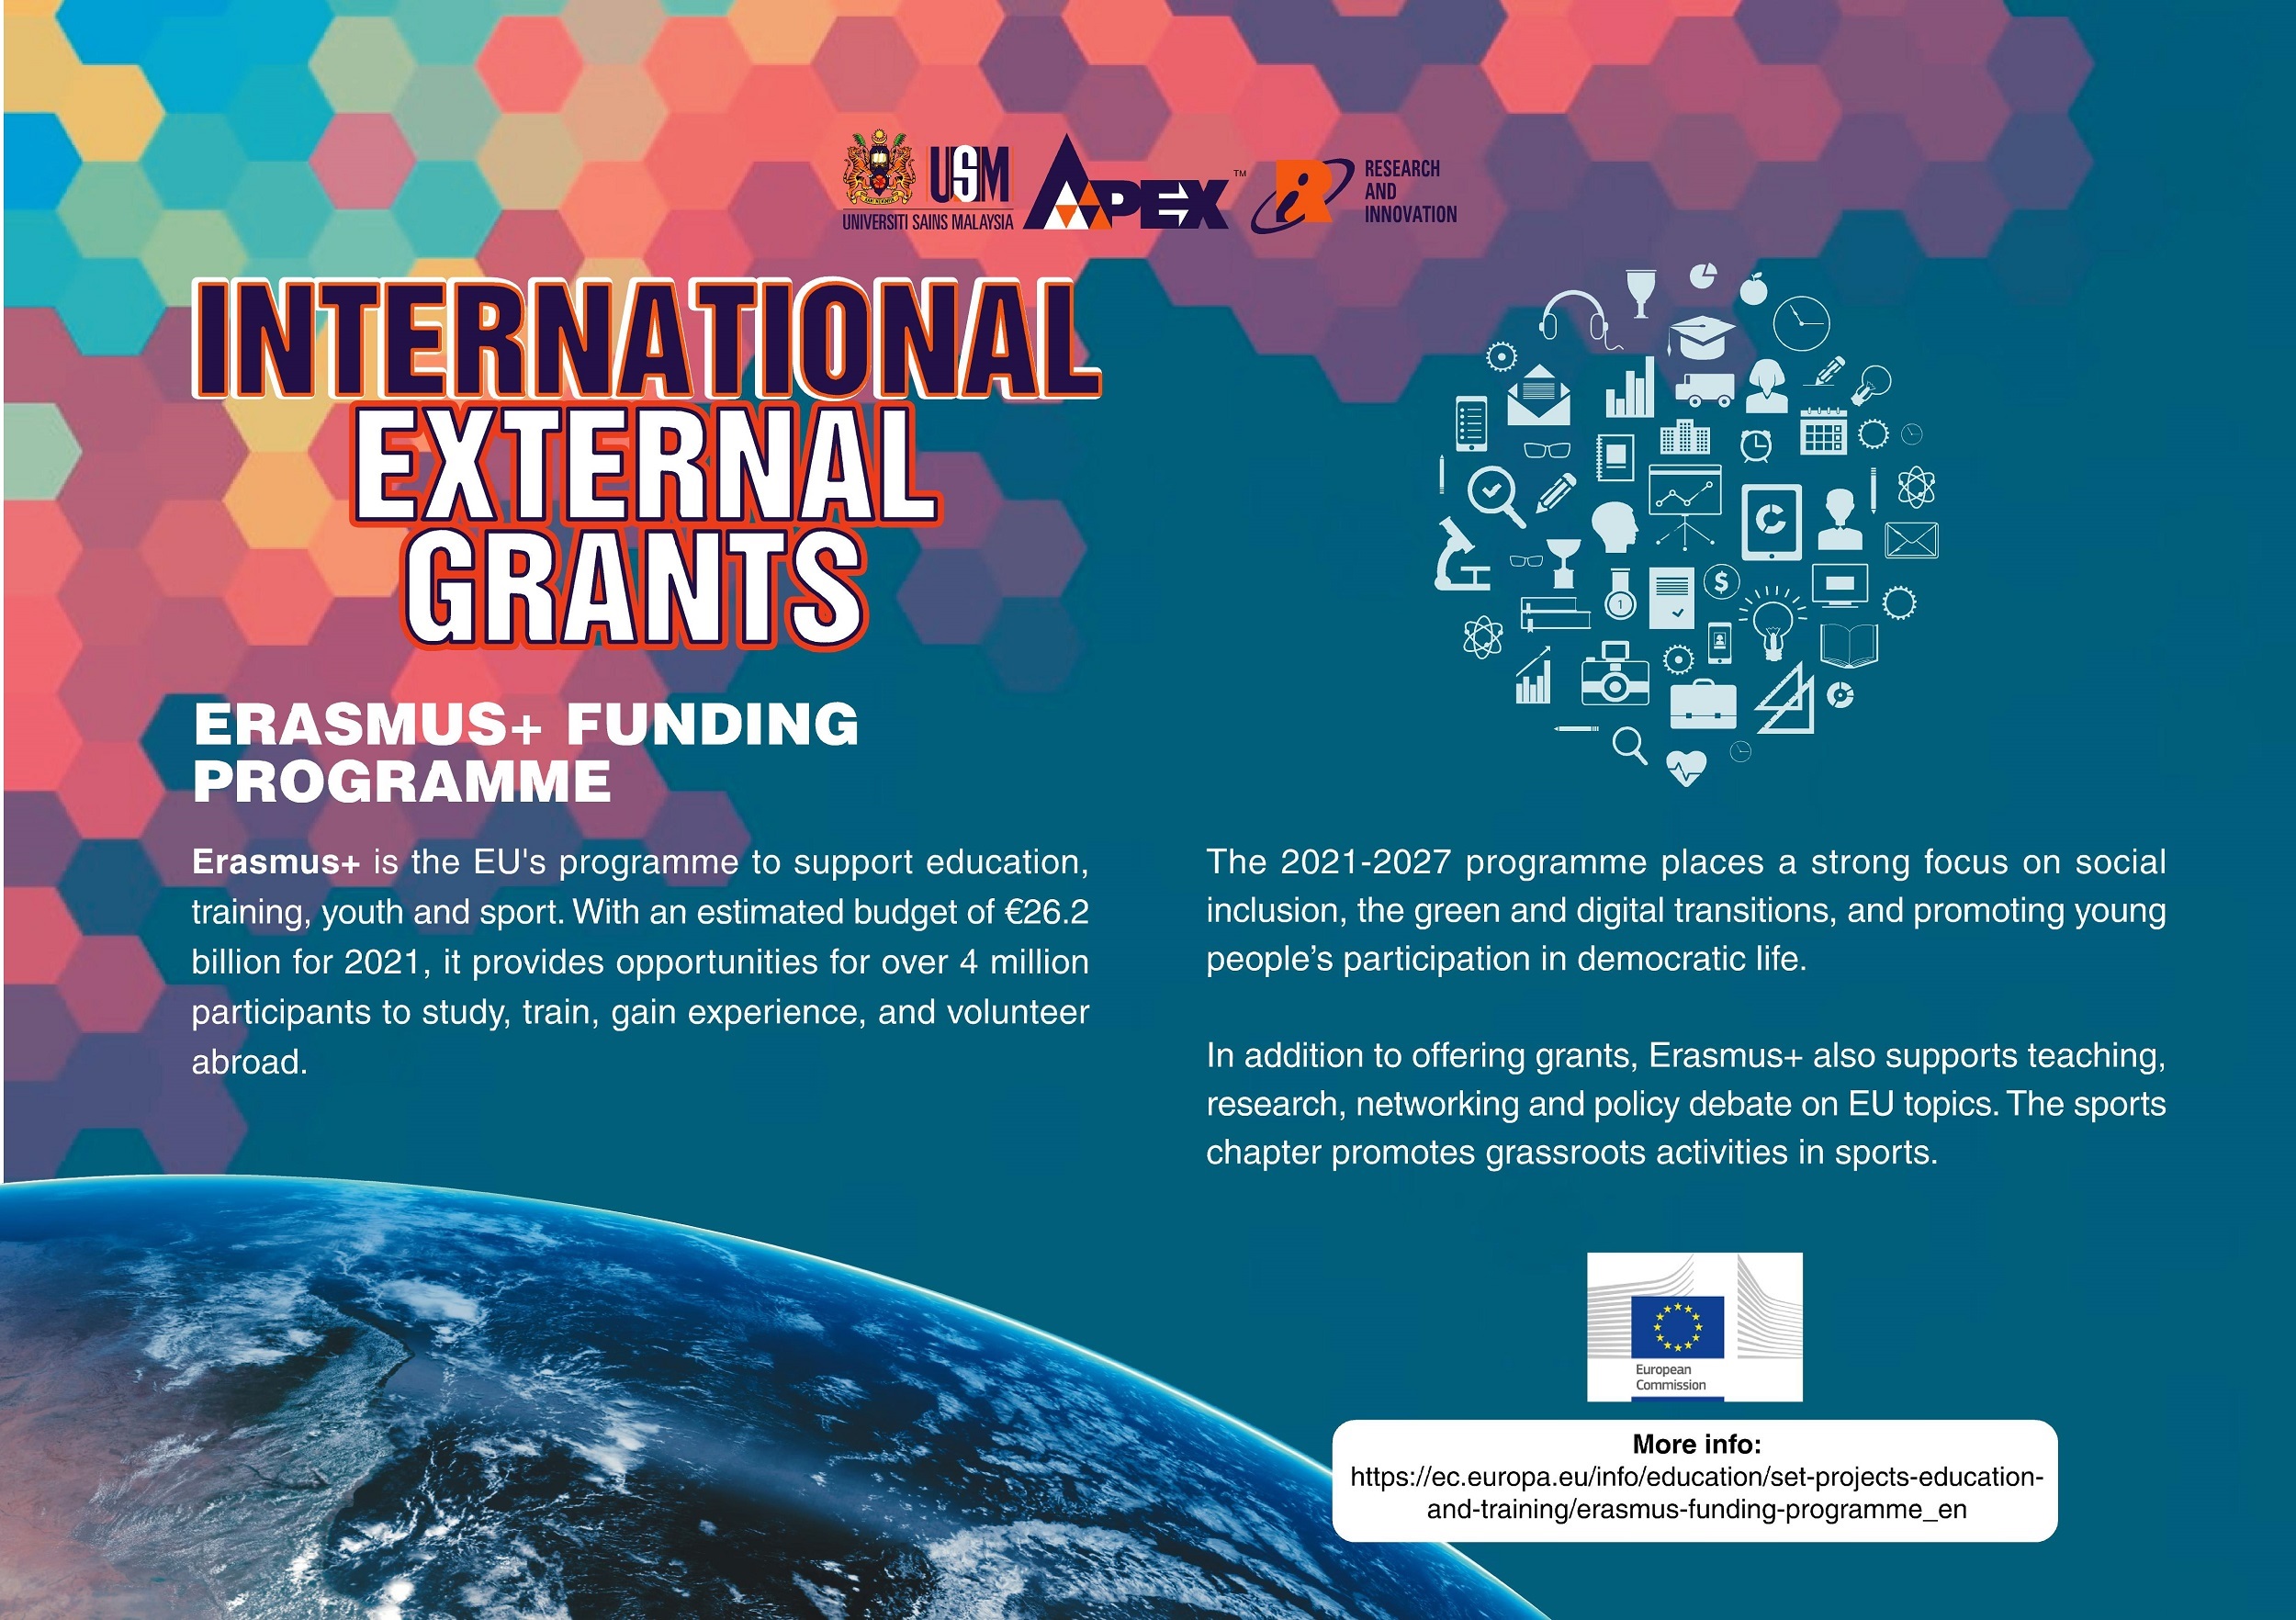 Poster External Grants International ERASMUS edited